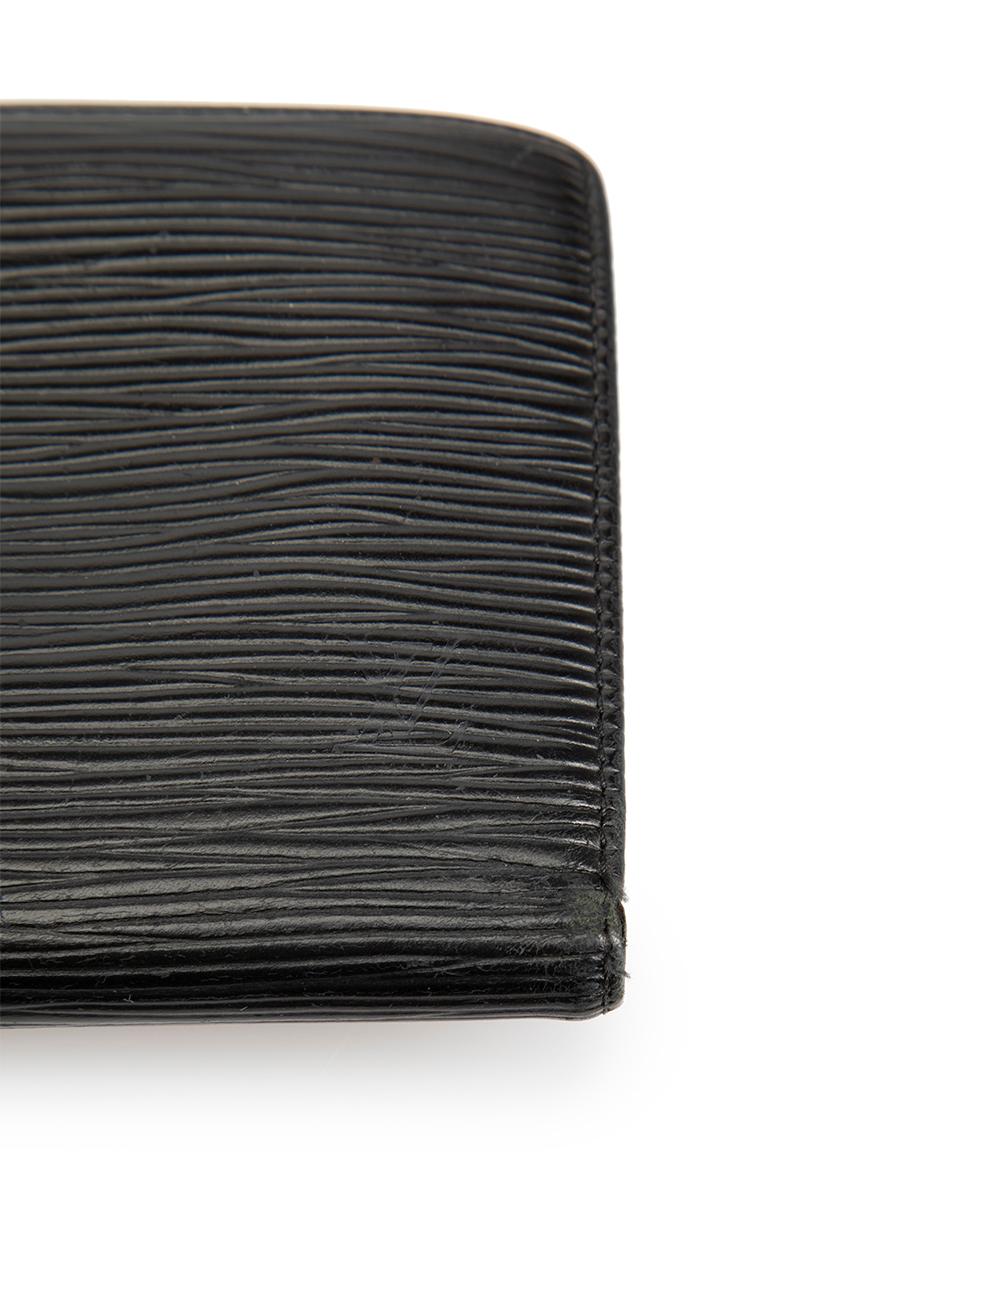 Louis Vuitton Women's Black Epi Leather French Purse Wallet 6